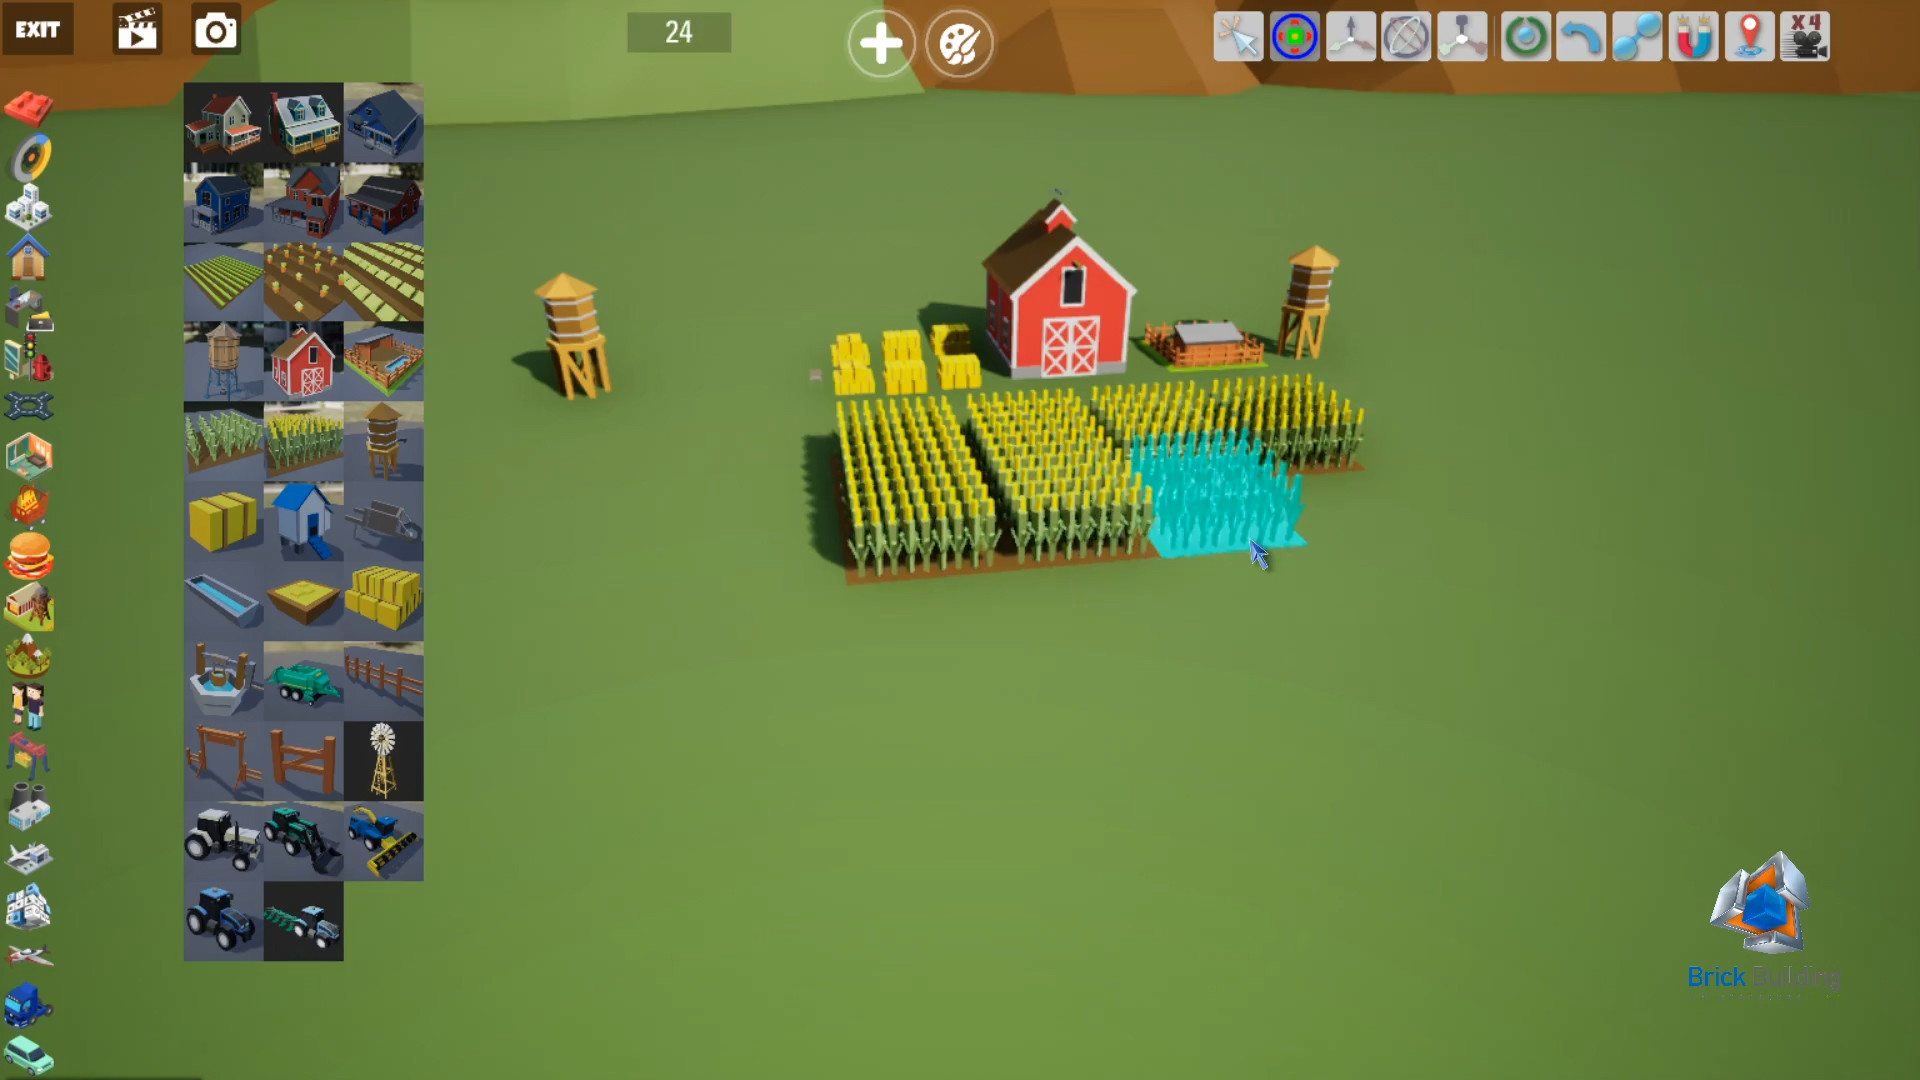 Brick Building screenshot